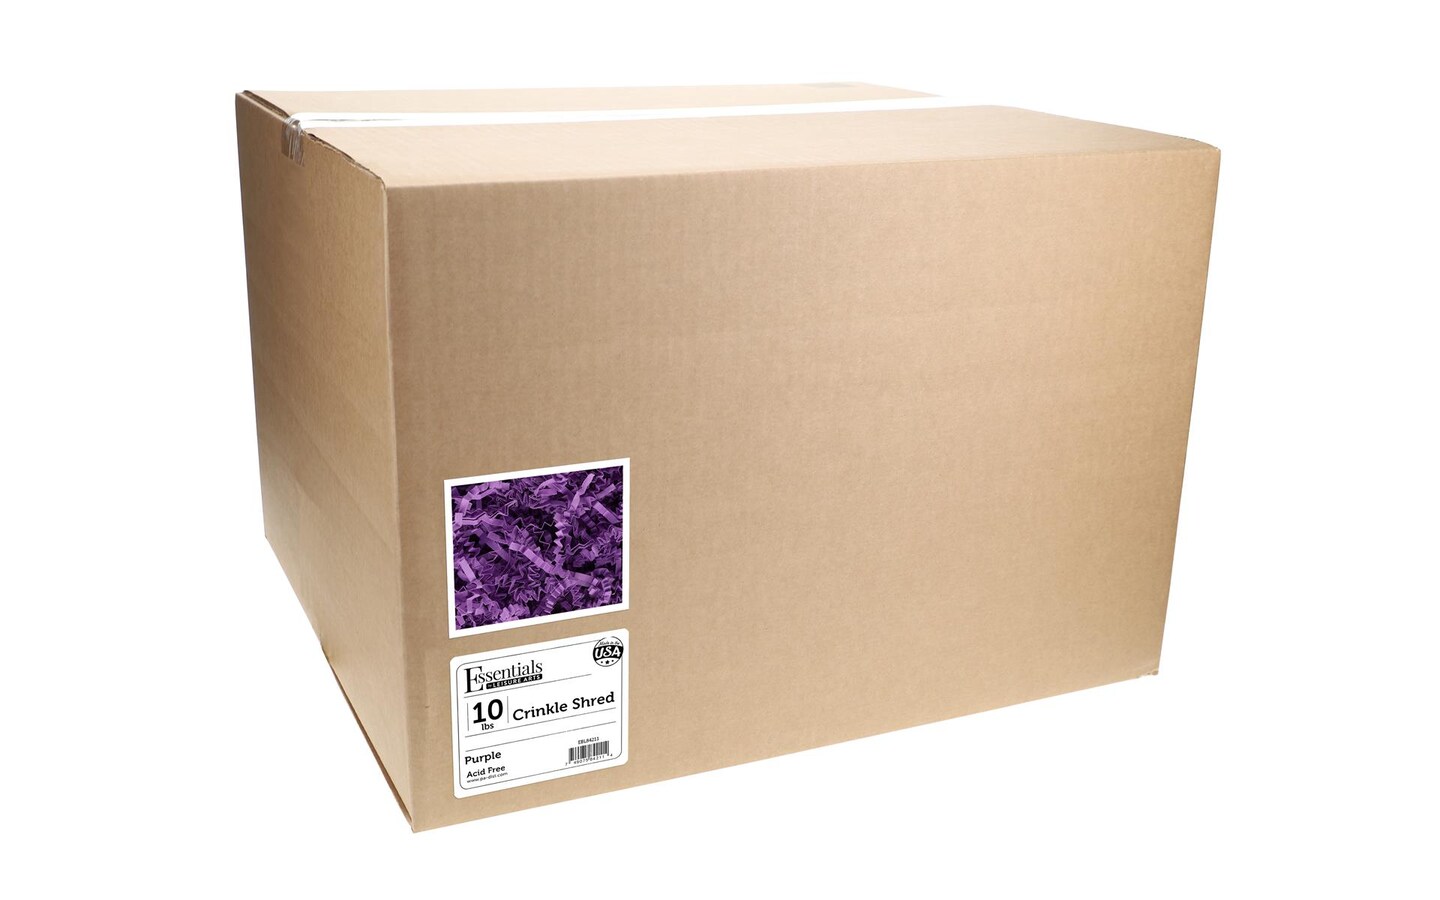 Essentials by Leisure Arts Crinkle Shred Box, Purple, 10lbs Shredded Paper Filler, Crinkle Cut Paper Shred Filler, Box Filler, Shredded Paper for Gift Box, Paper Crinkle Filler, Box Filling